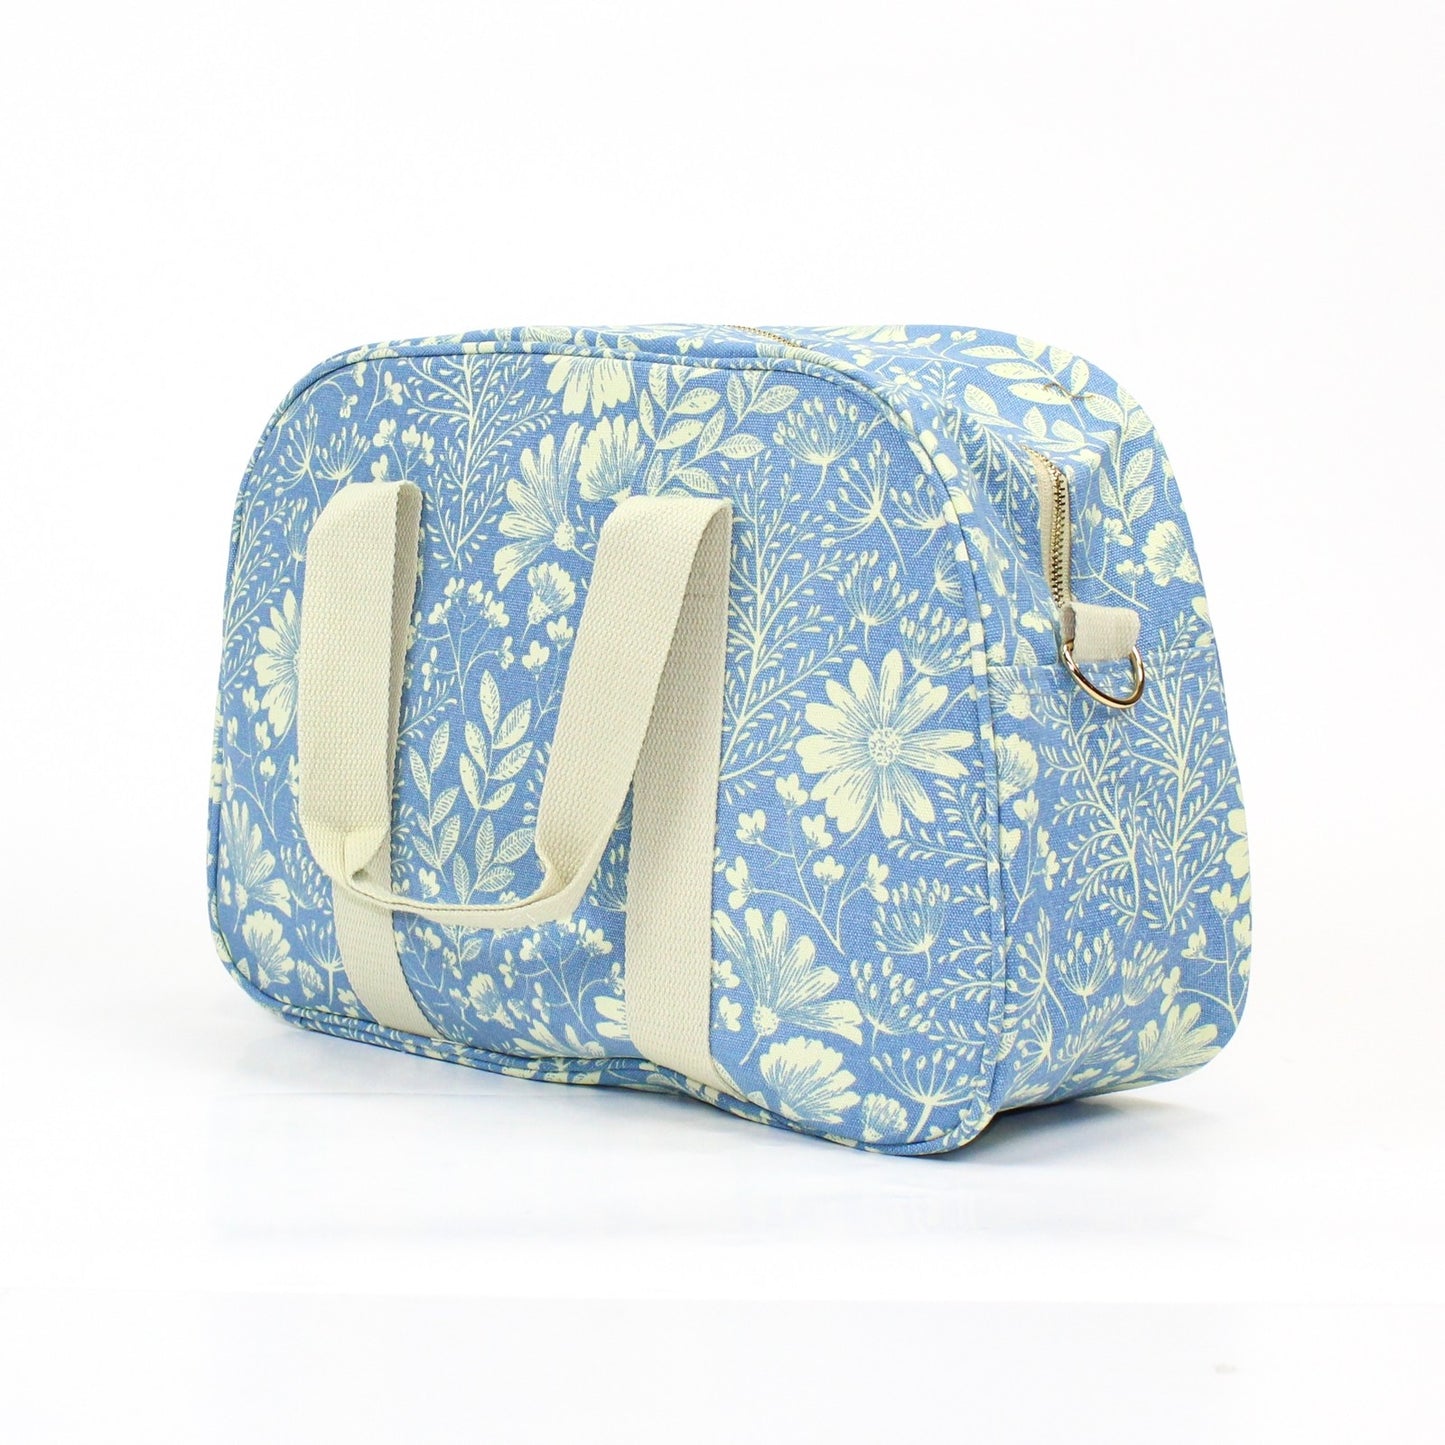 Pretty floral print weekend bag, on a light powder blue background.